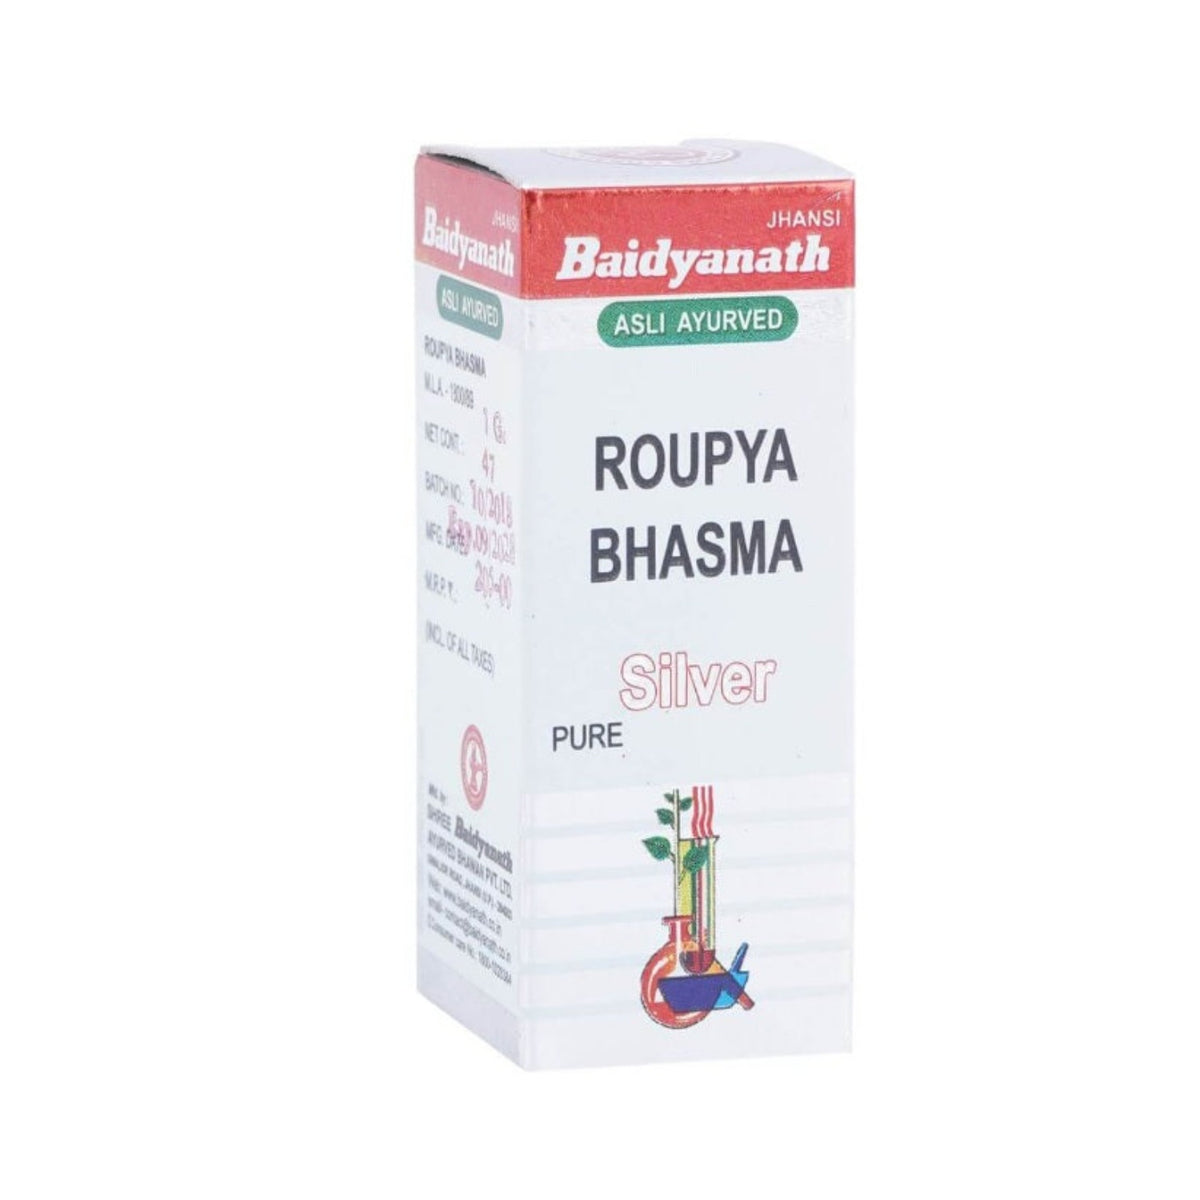 Baidyanath Ayurvedic (Jhansi) Roupya Bhasma Pure Silver Powder